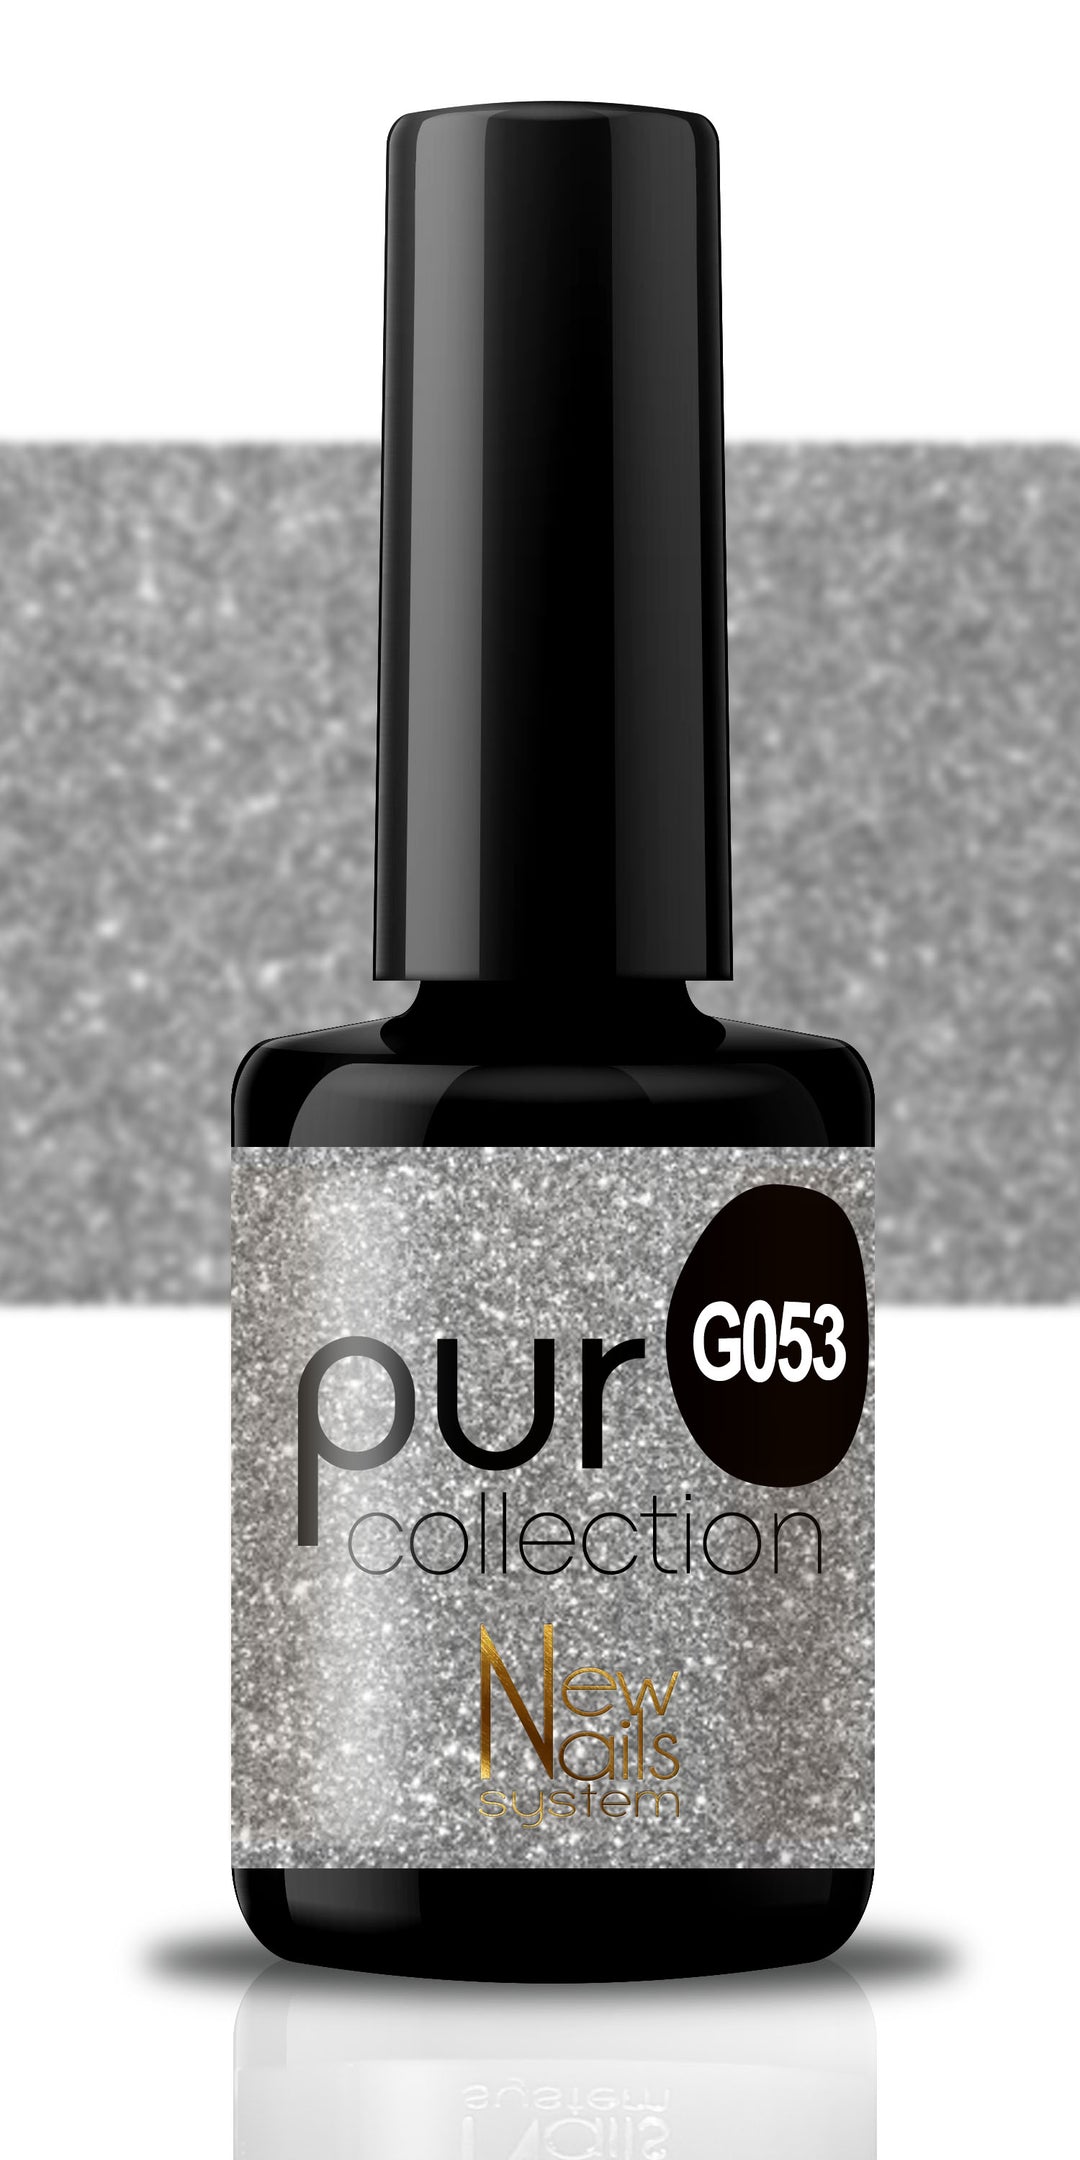 Puro collection G053 color gel polish 5ml